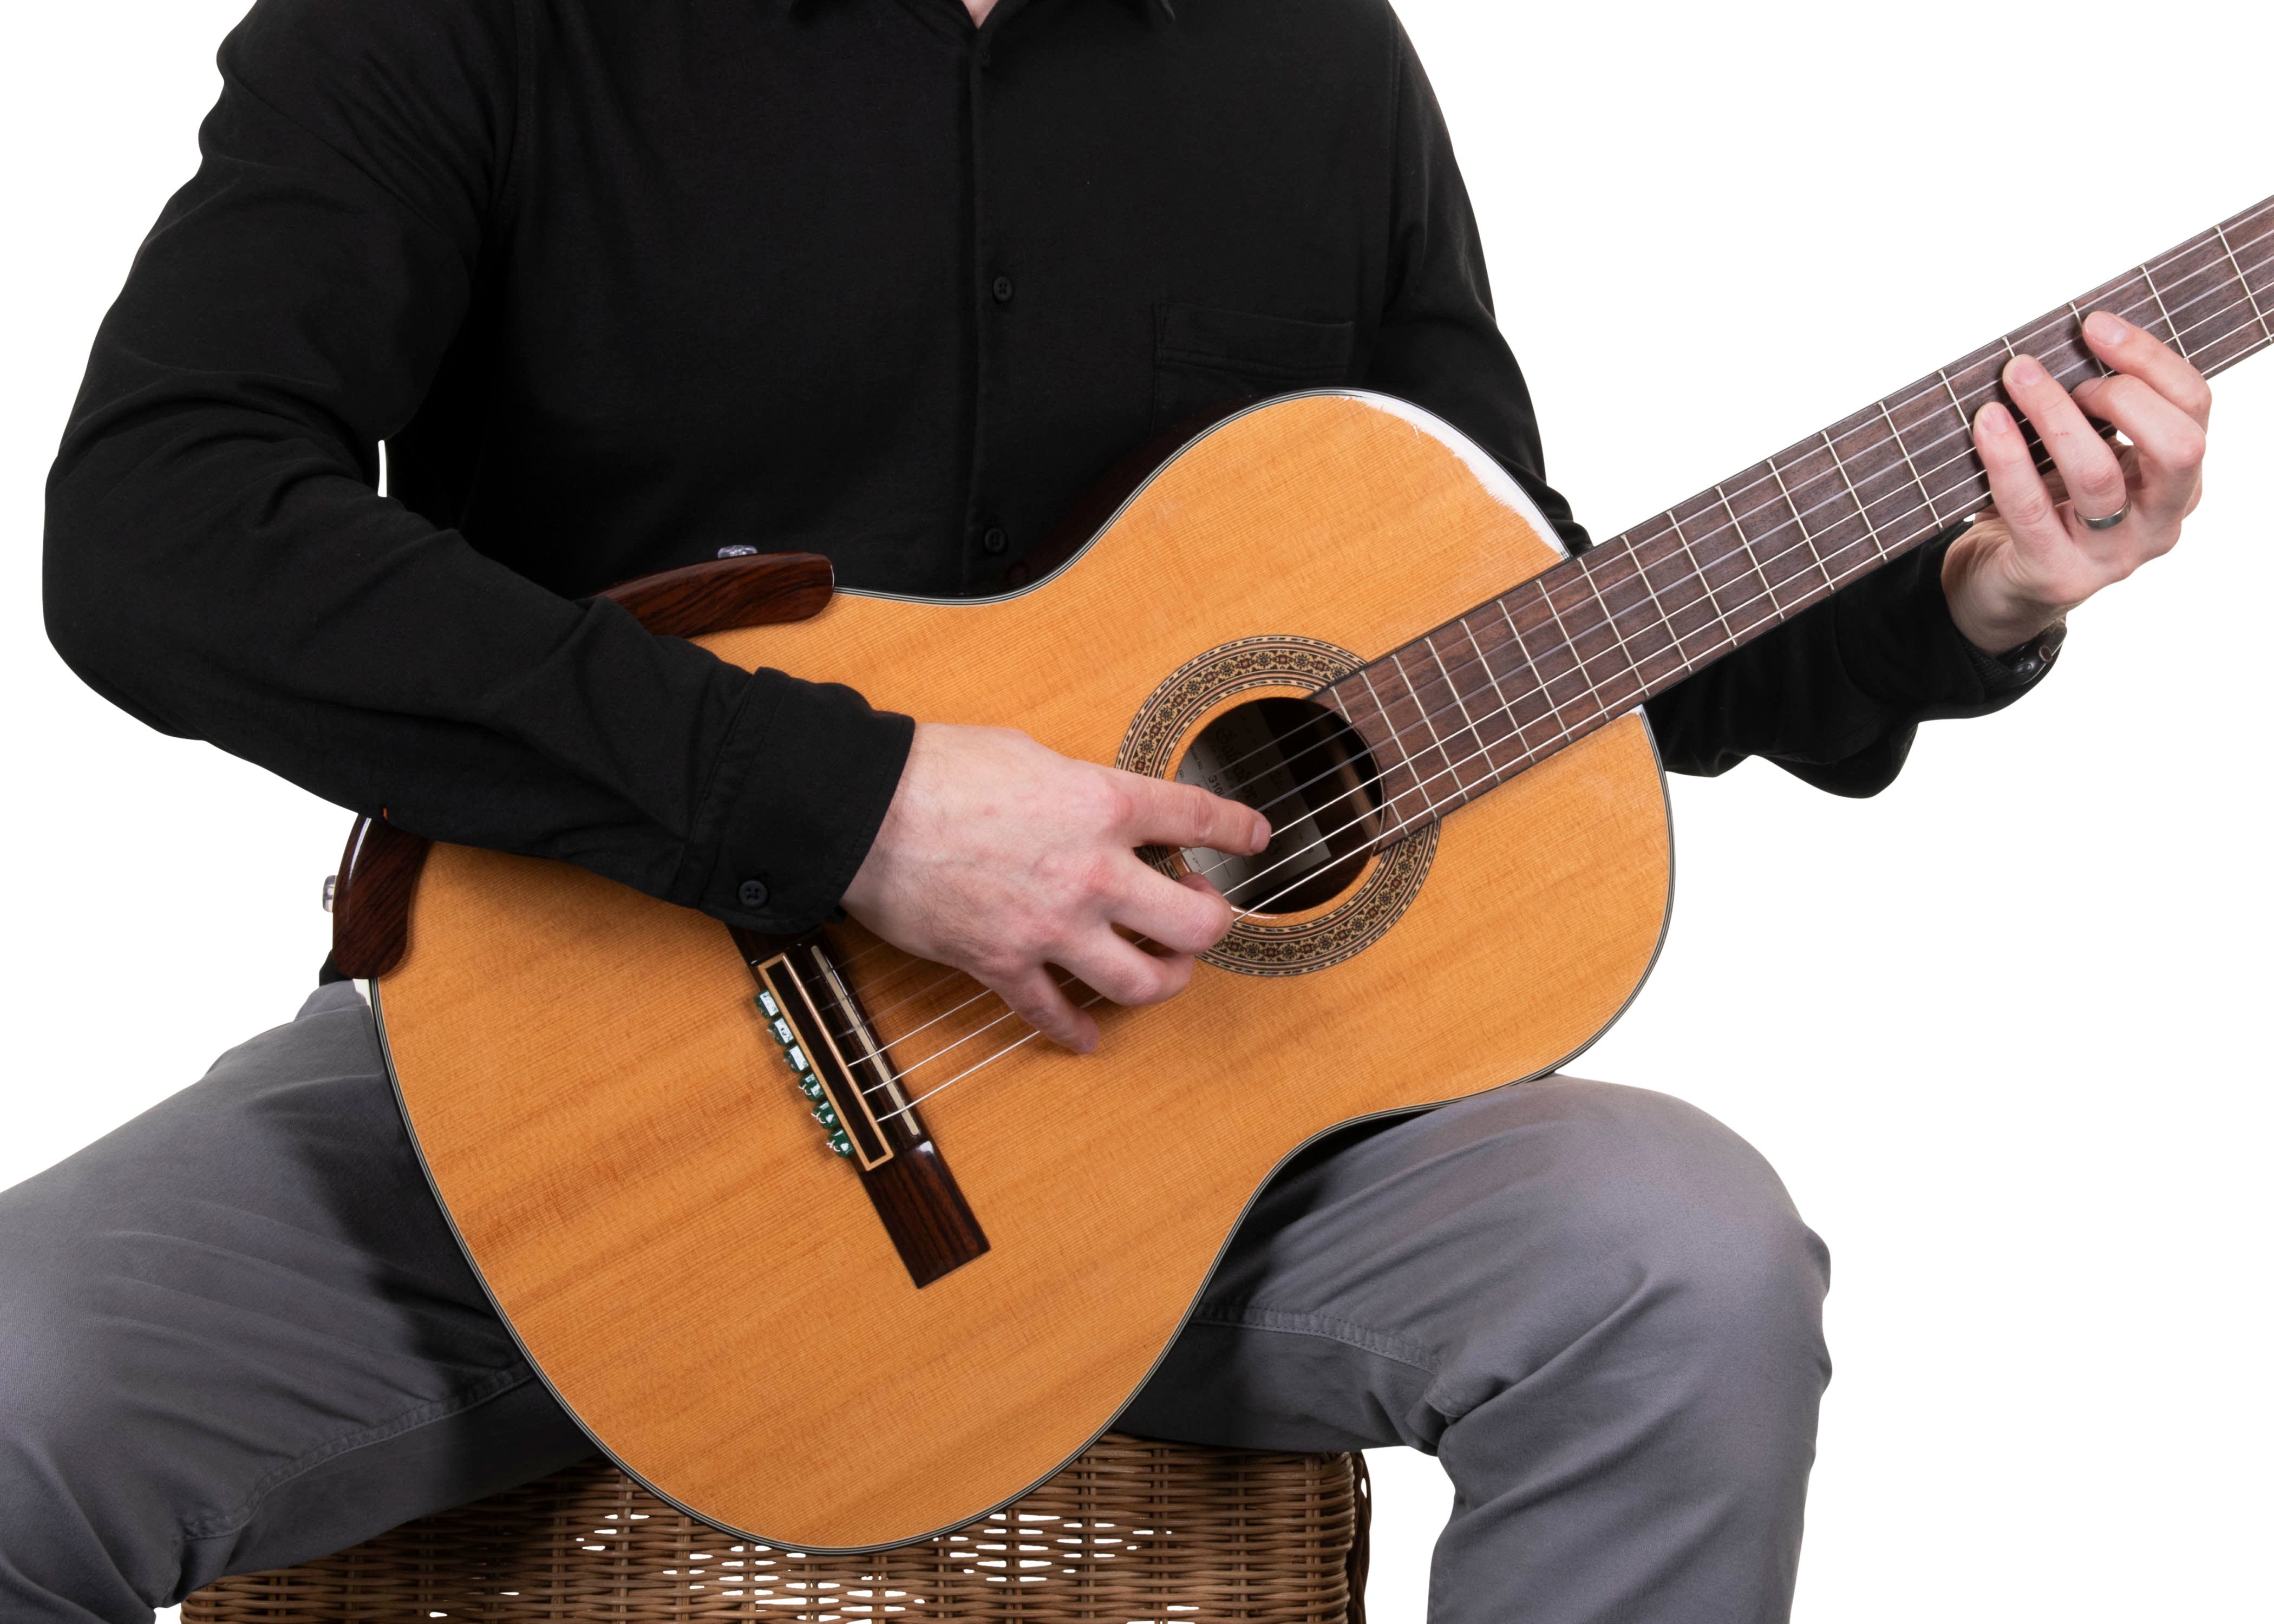 Classical Guitar Armrest, Dark Brown Acoustic, Flamenco Guitar Arm Rest Alba Guitar ArmRest